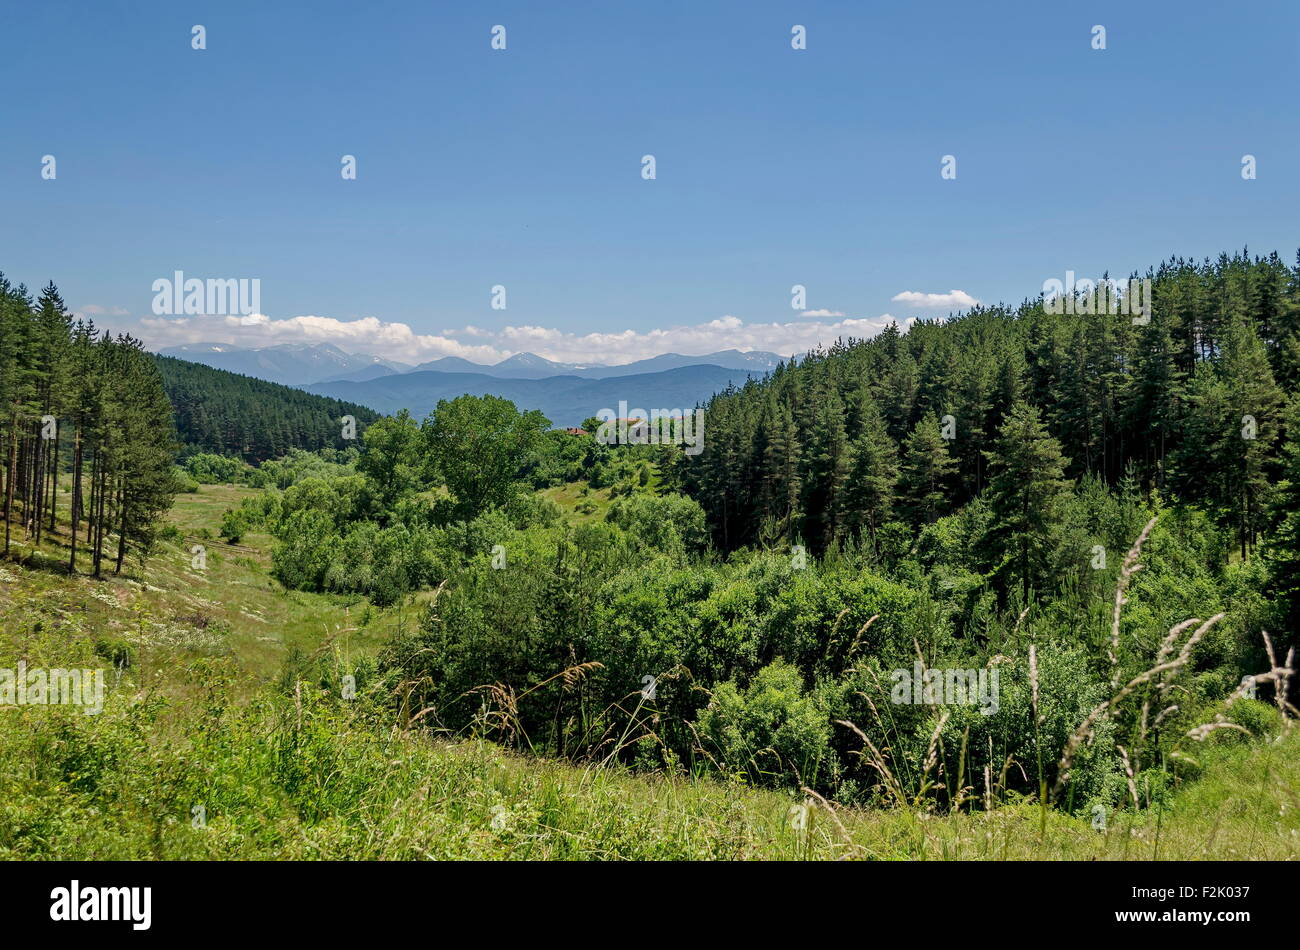 Mountain Plana and beautiful village Alino,  Bulgaria Stock Photo